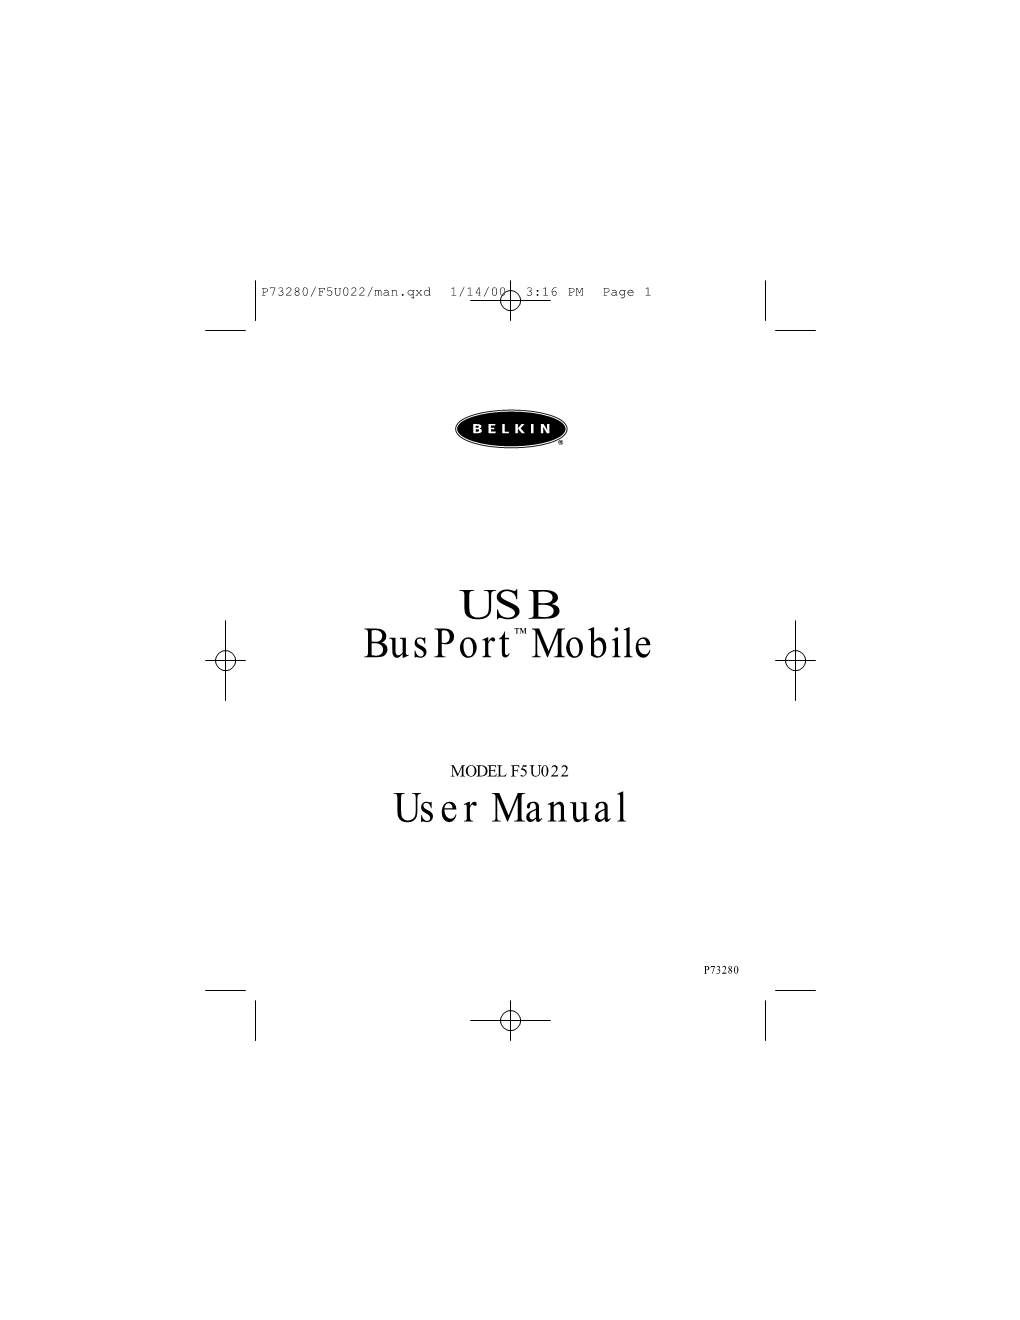 USB Busport™ Mobile User Manual